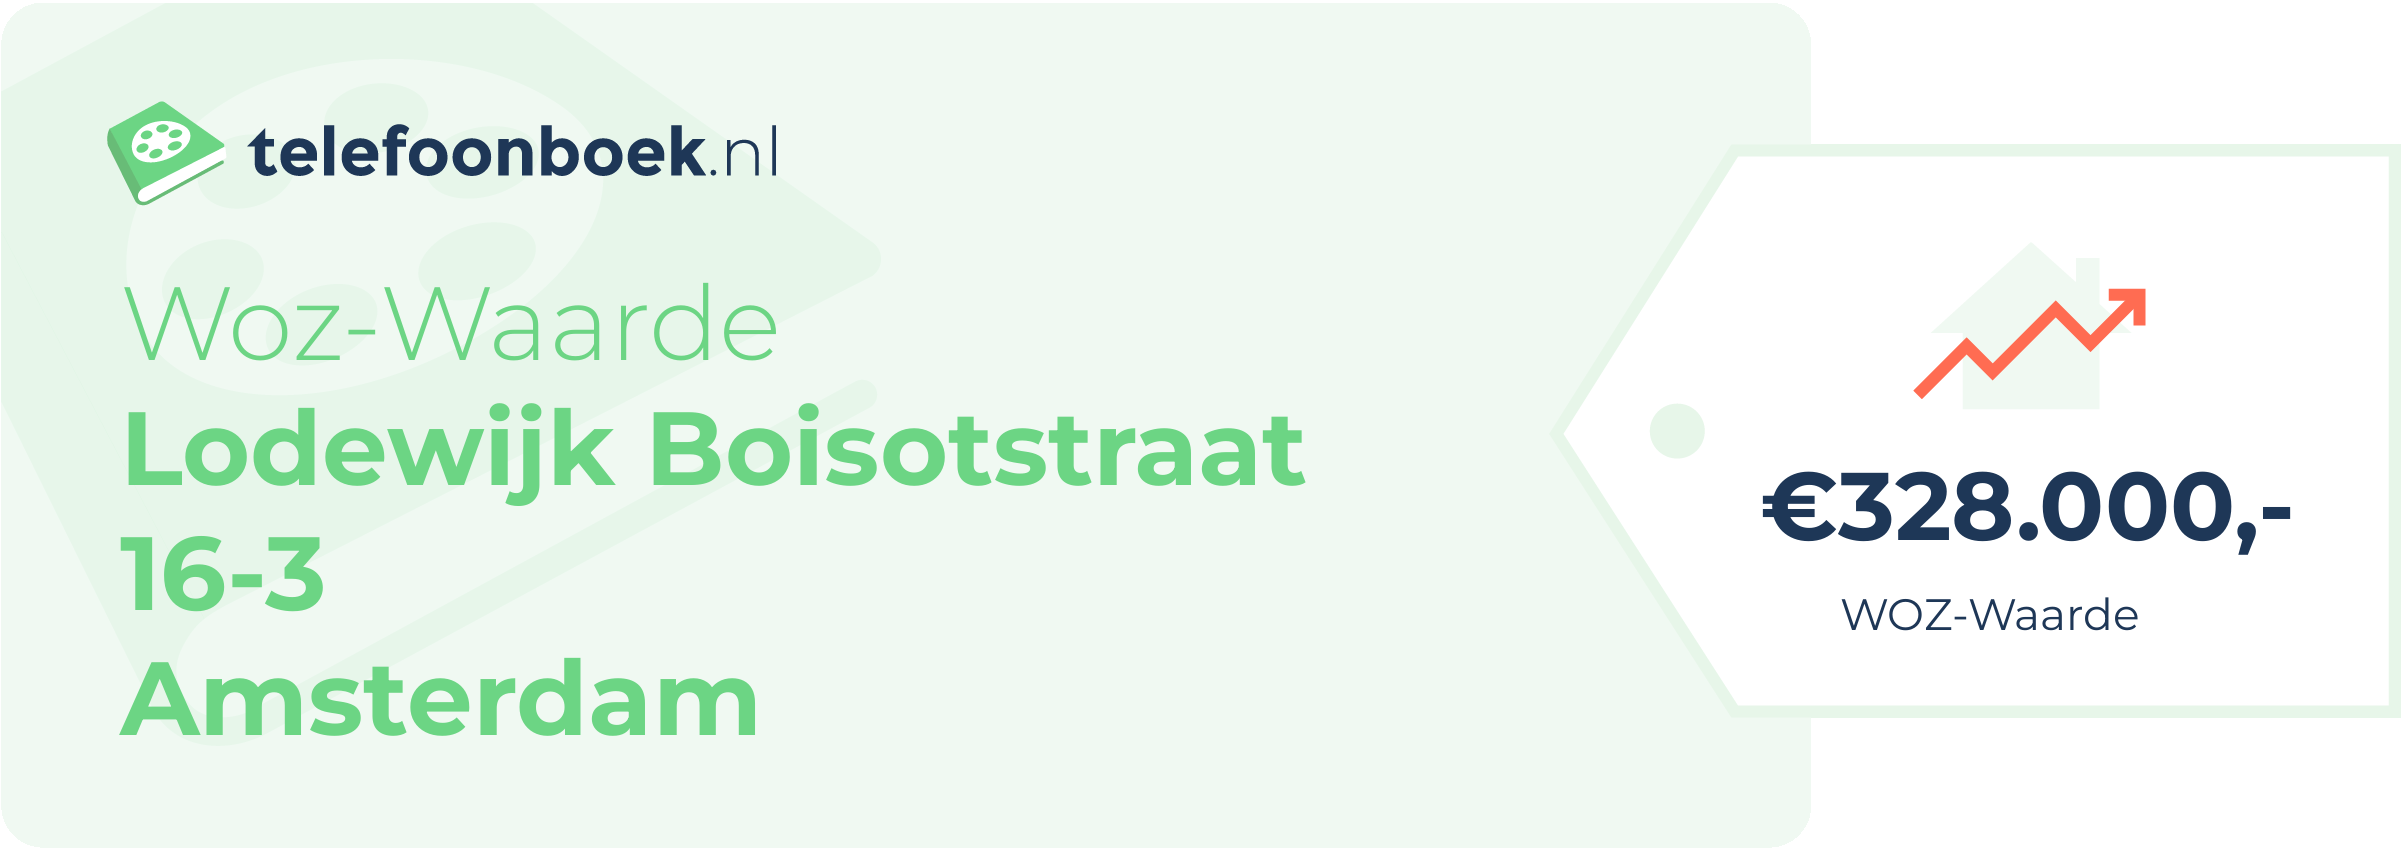 WOZ-waarde Lodewijk Boisotstraat 16-3 Amsterdam